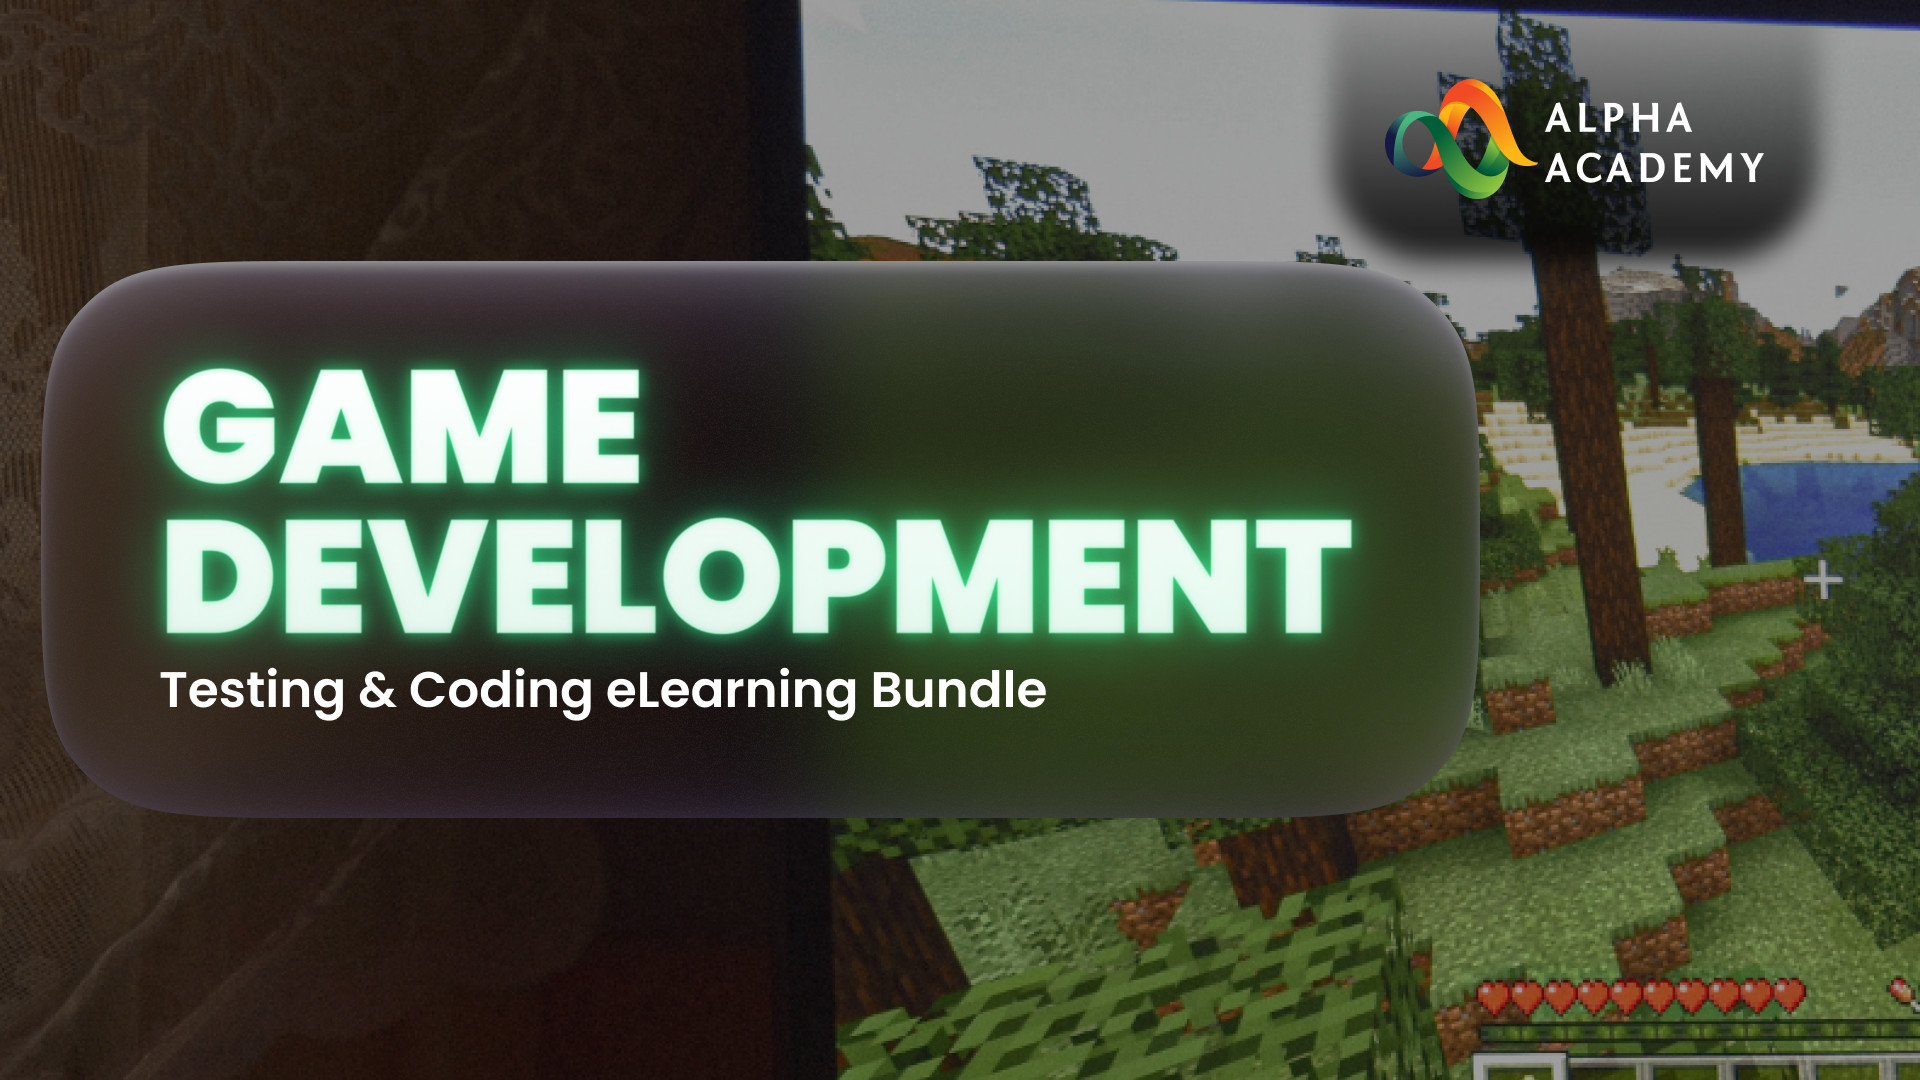 Game Development, Testing & Coding eLearning Bundle Alpha Academy Code, 10.19 usd